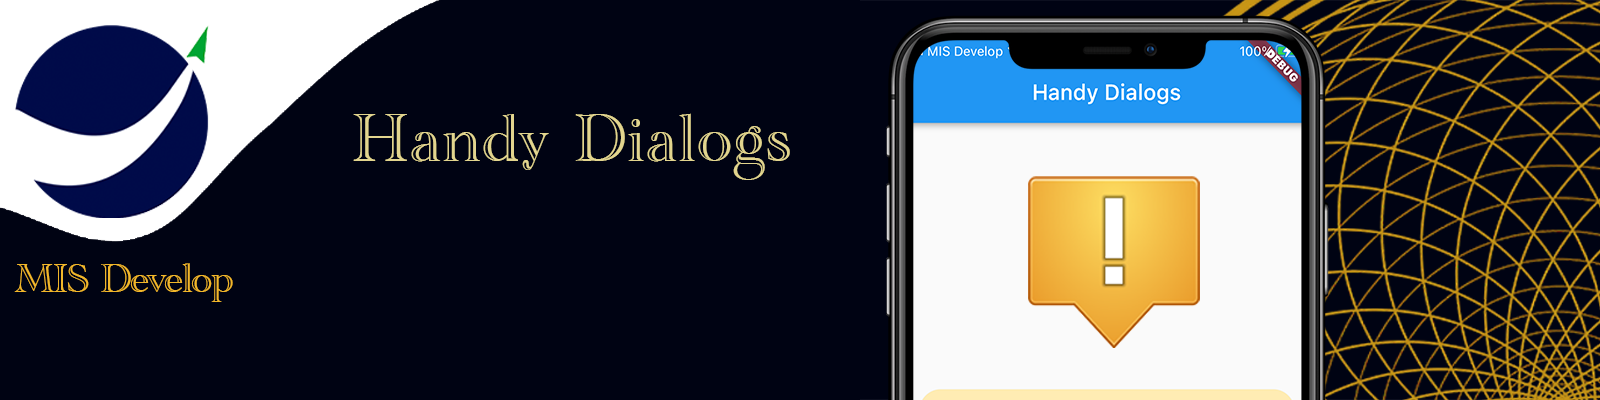 Handy Dialogs